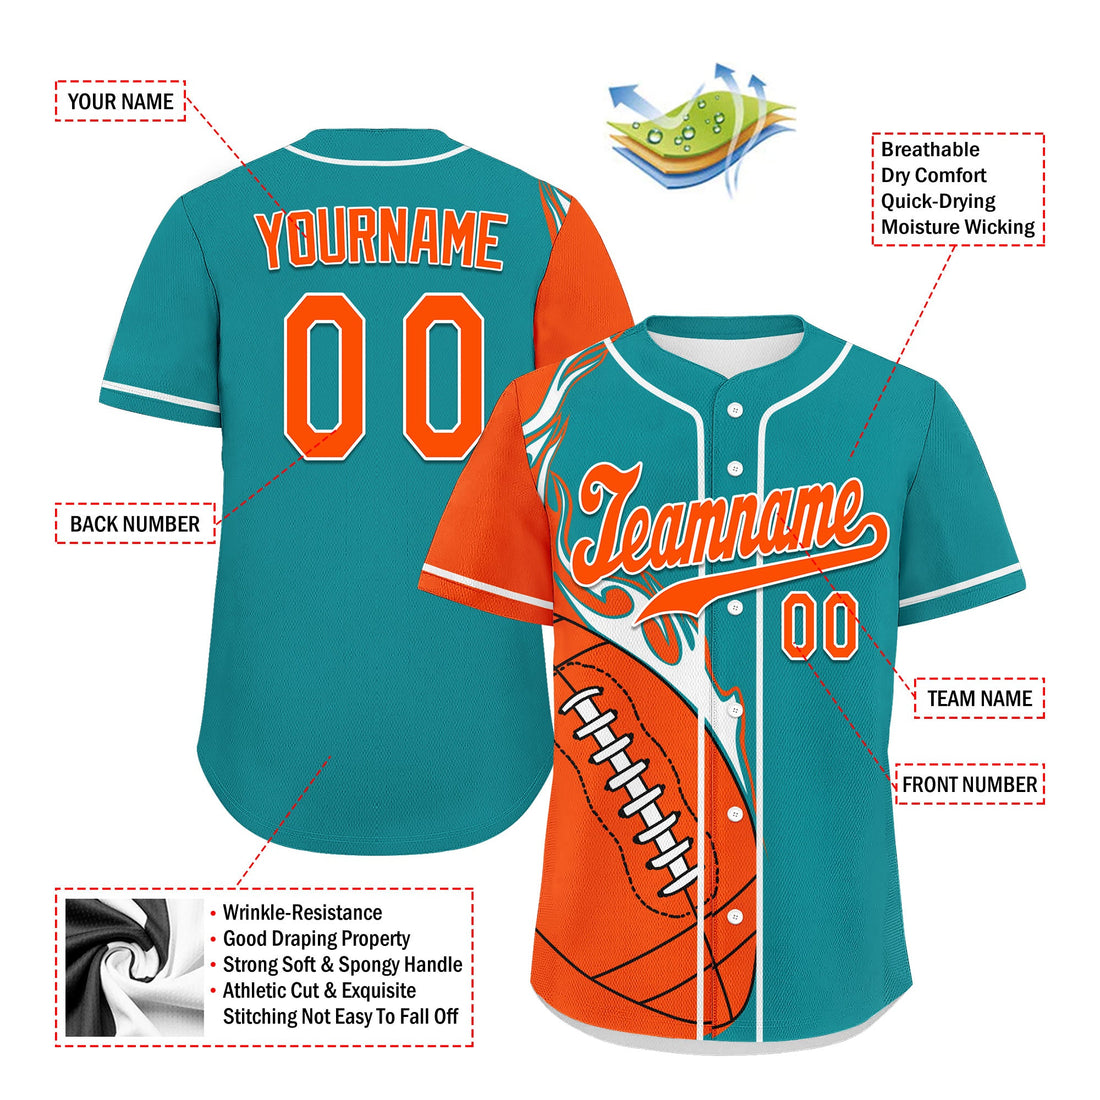 Custom Cyan Orange Classic Style Personalized Authentic Baseball Jersey UN002-D0b0a00-ba